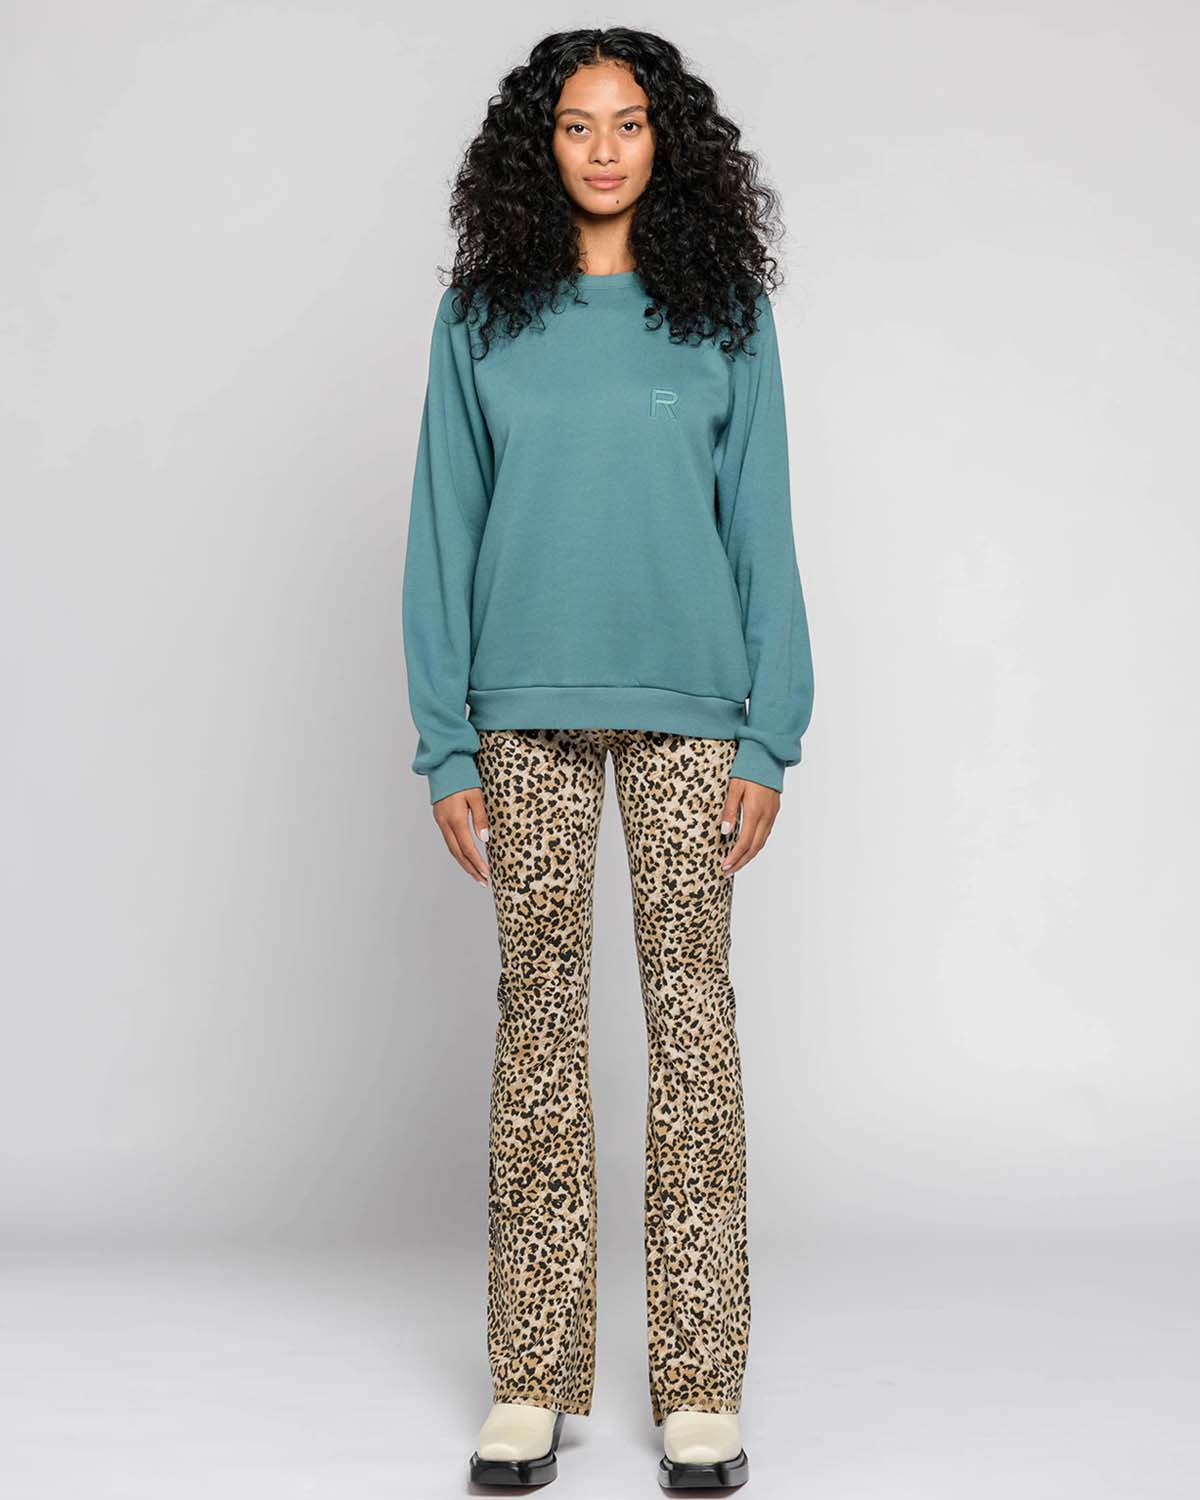 https://www.lagrandeboutique.net/media/catalog/product/l/o/long-flare-leggings-leopard-ragdollla.jpg